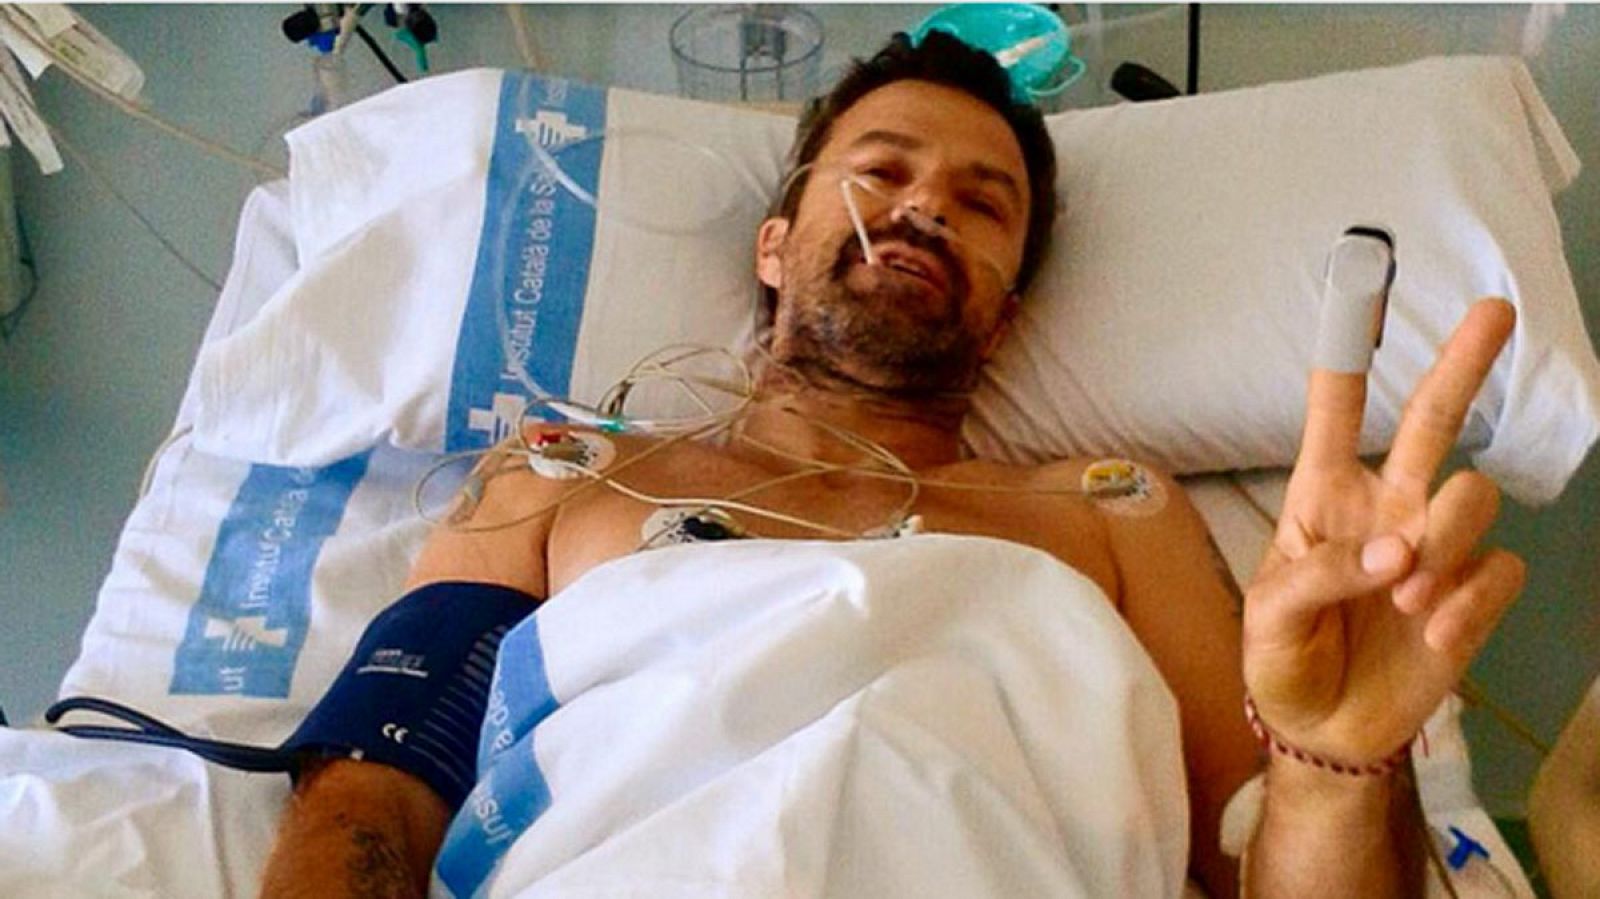 Pau Donés, cantante de Jarabe de Palo, en una cama del hospital Vall d'Hebron de Barcelona, que él mismo ha subido a la red social Instagram.